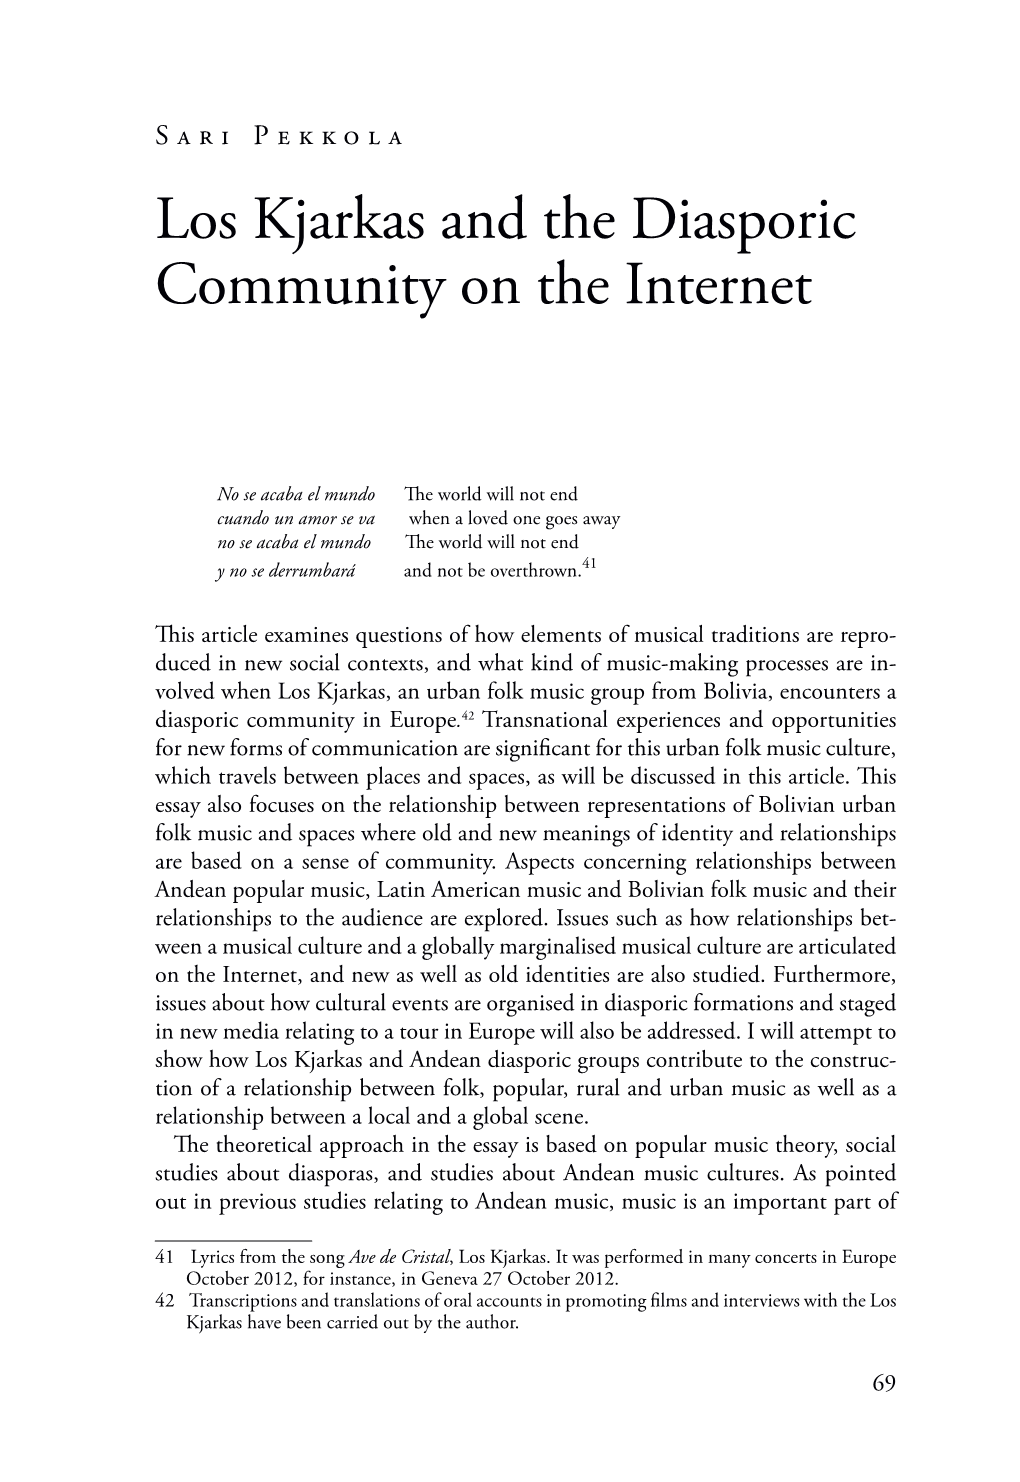 Los Kjarkas and the Diasporic Community on the Internet